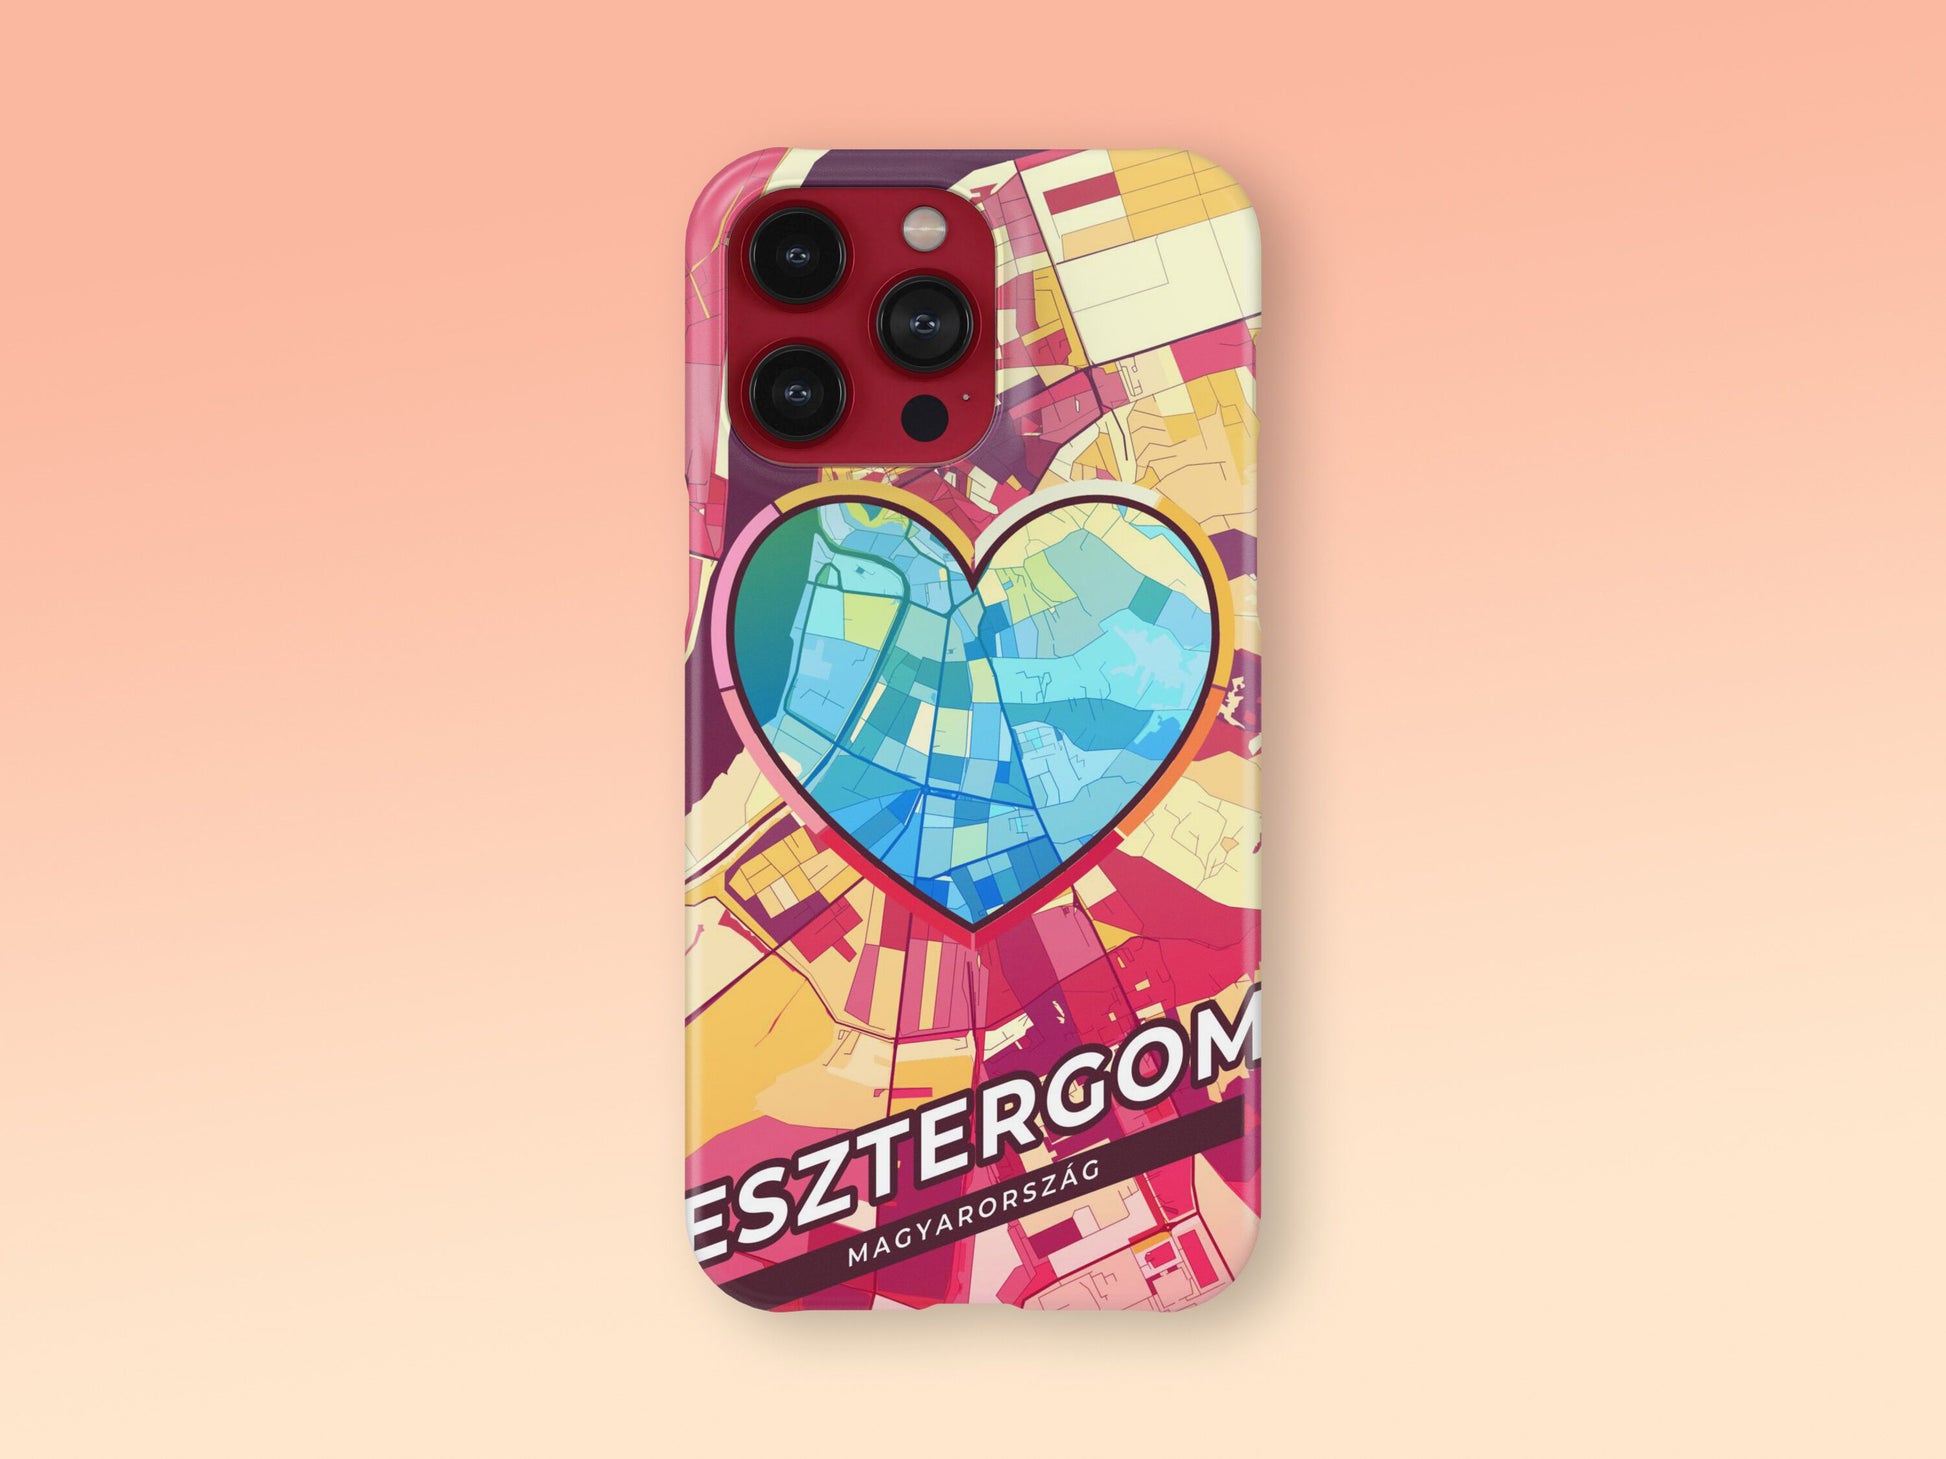 Esztergom Hungary slim phone case with colorful icon. Birthday, wedding or housewarming gift. Couple match cases. 2